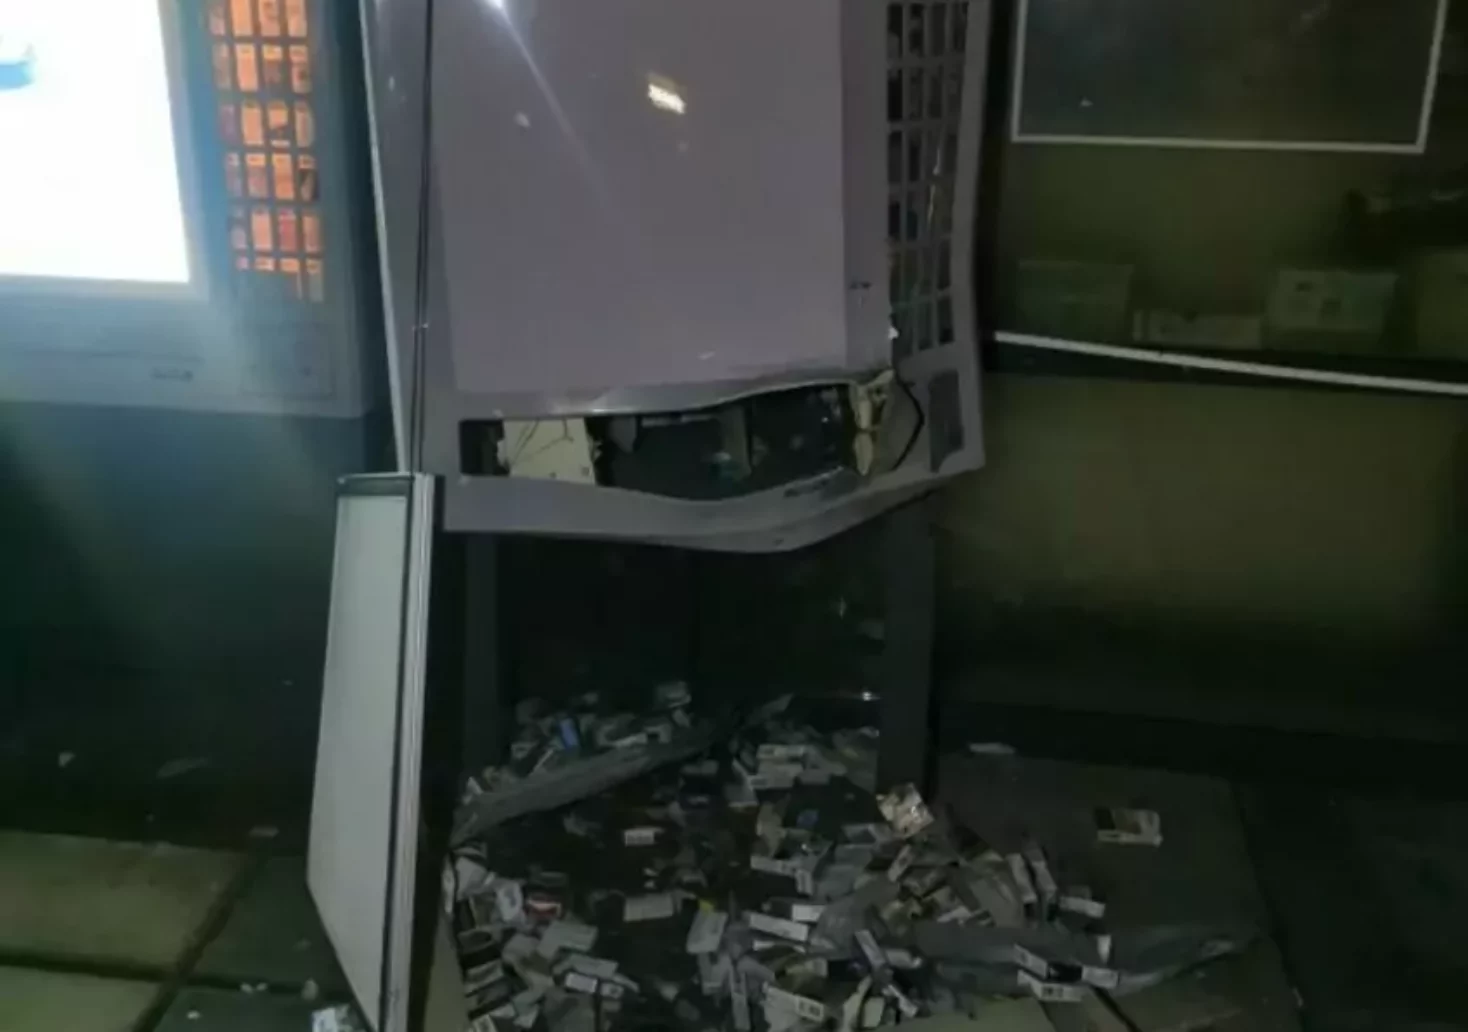 Jugendliche zersprengten Zigaretten-Automat mit Feuerwerkskörper